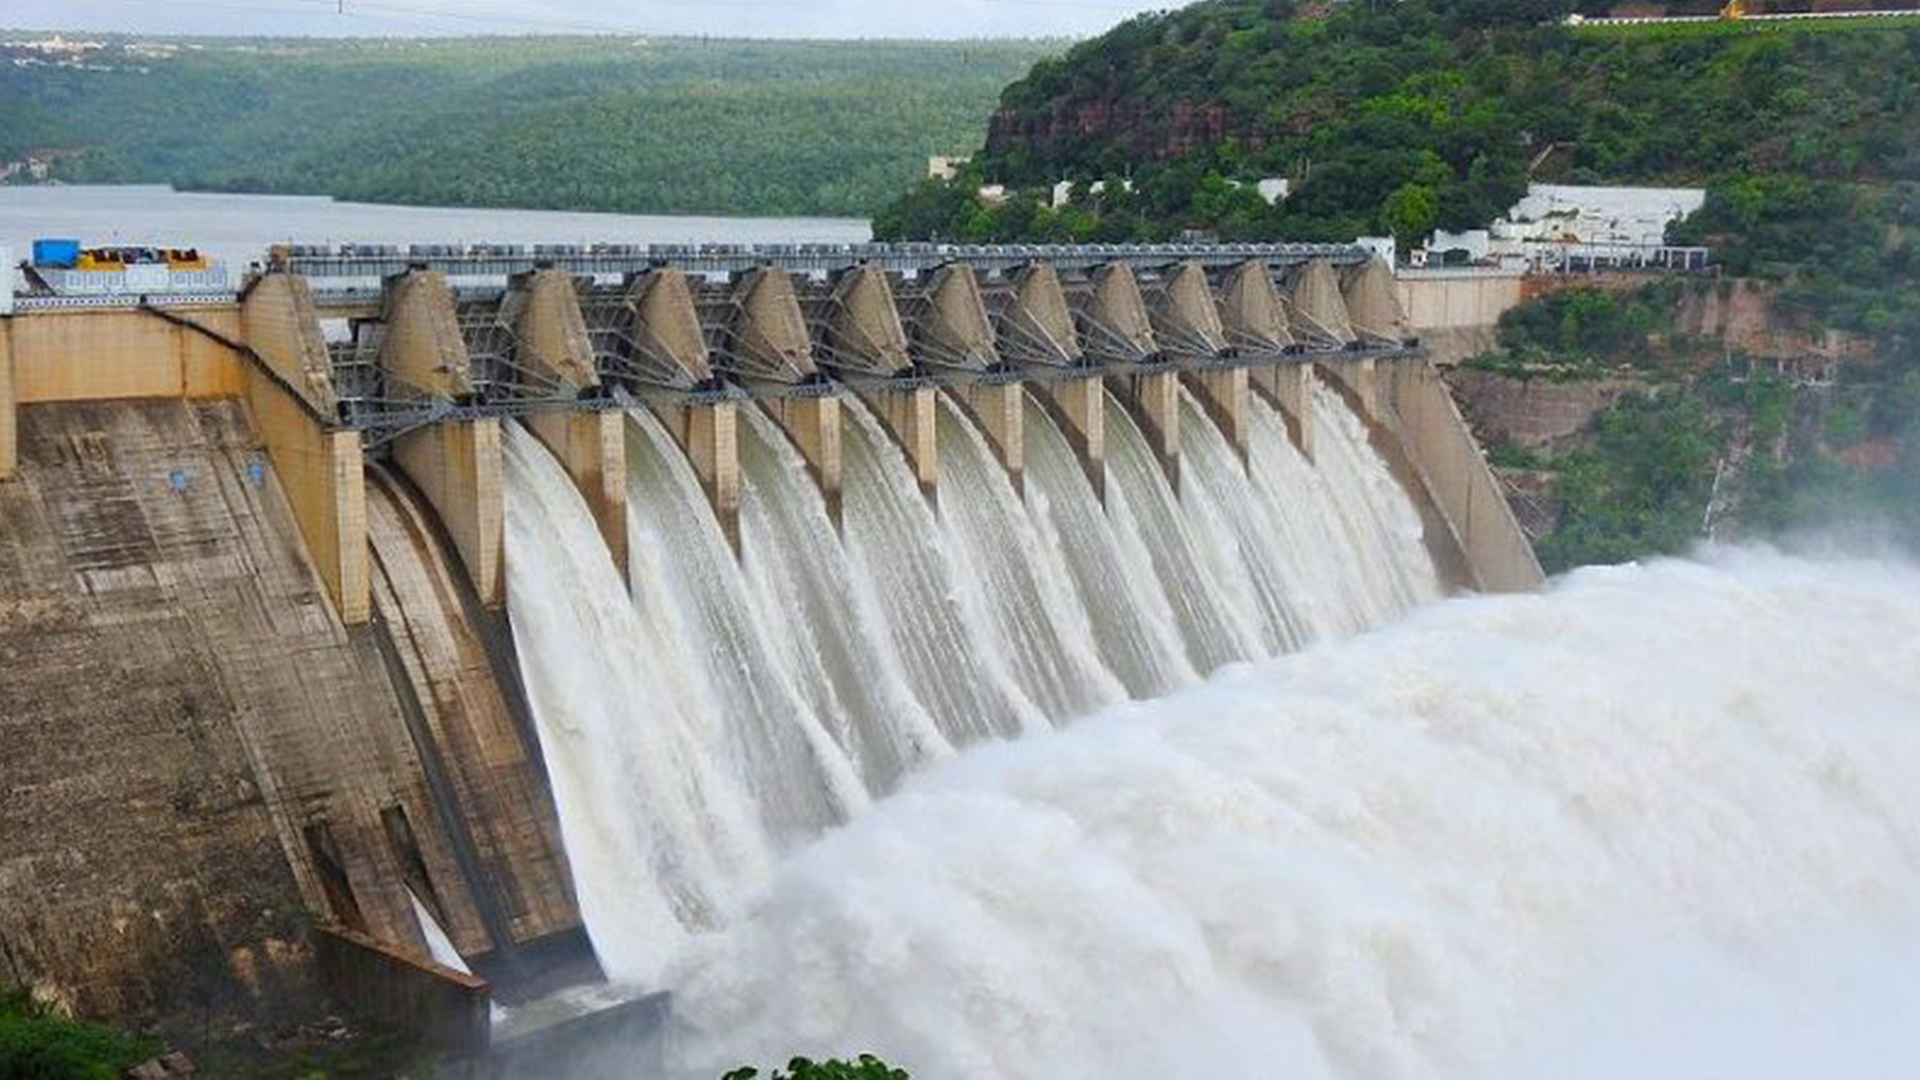 Lapchekhola Hydropower Project investment of Rs 26.20 billion